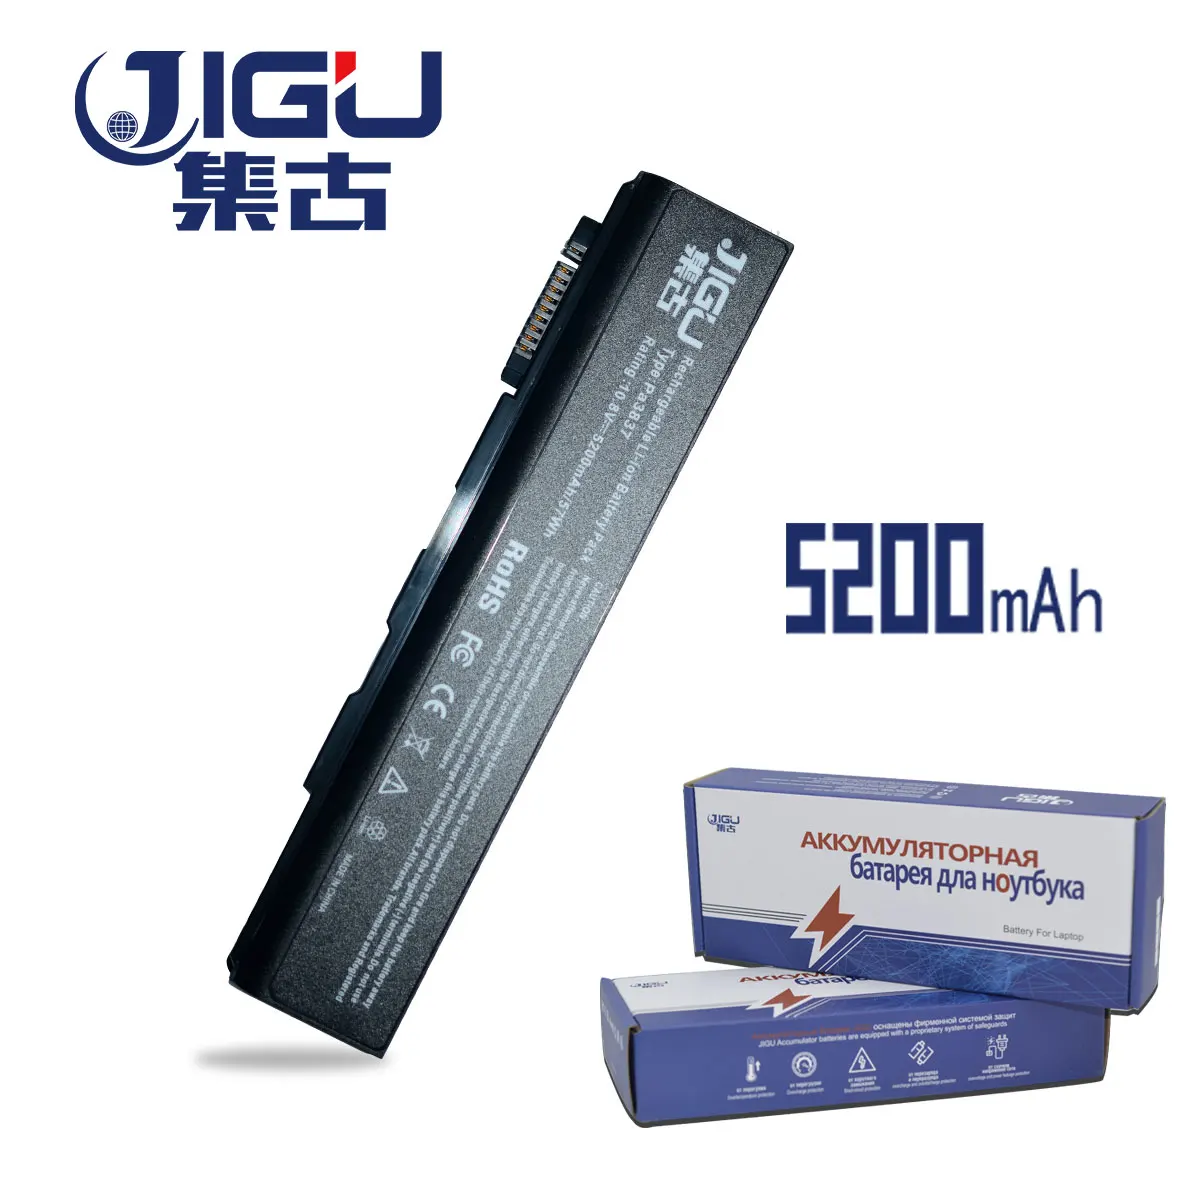 

JIGU Laptop Battery For Toshiba PA3787U-1BRS PABAS221 PABAS223 PABAS222 PA3788U-1BRS PA3786U-1BRS Tecra A11 M11 S11